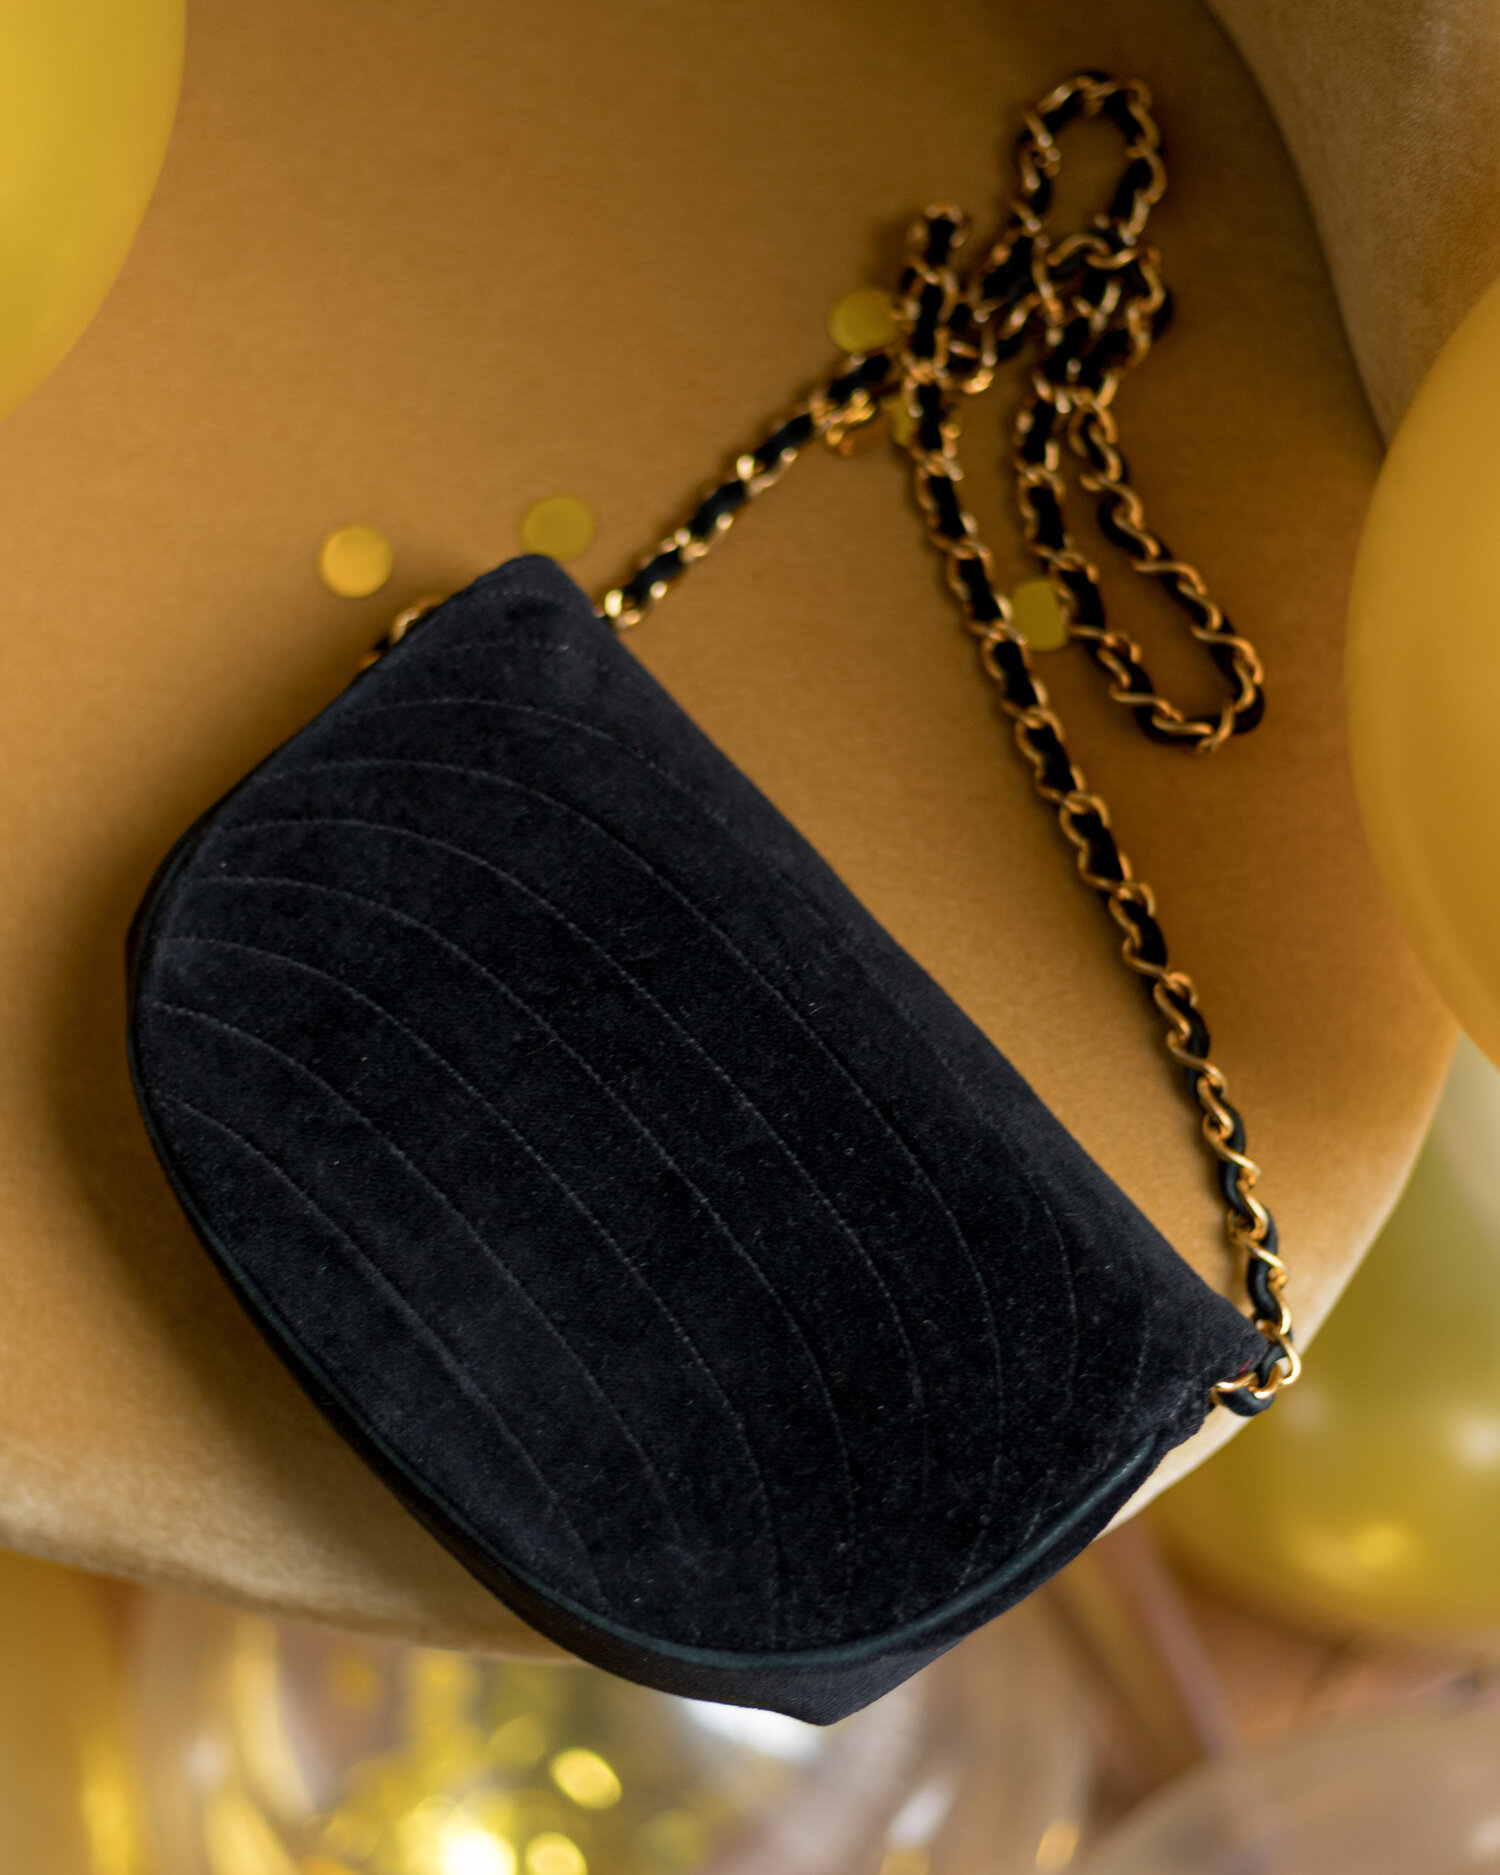 Tory Burch Kira Velvet Mini Flap Bag - Black/Gold